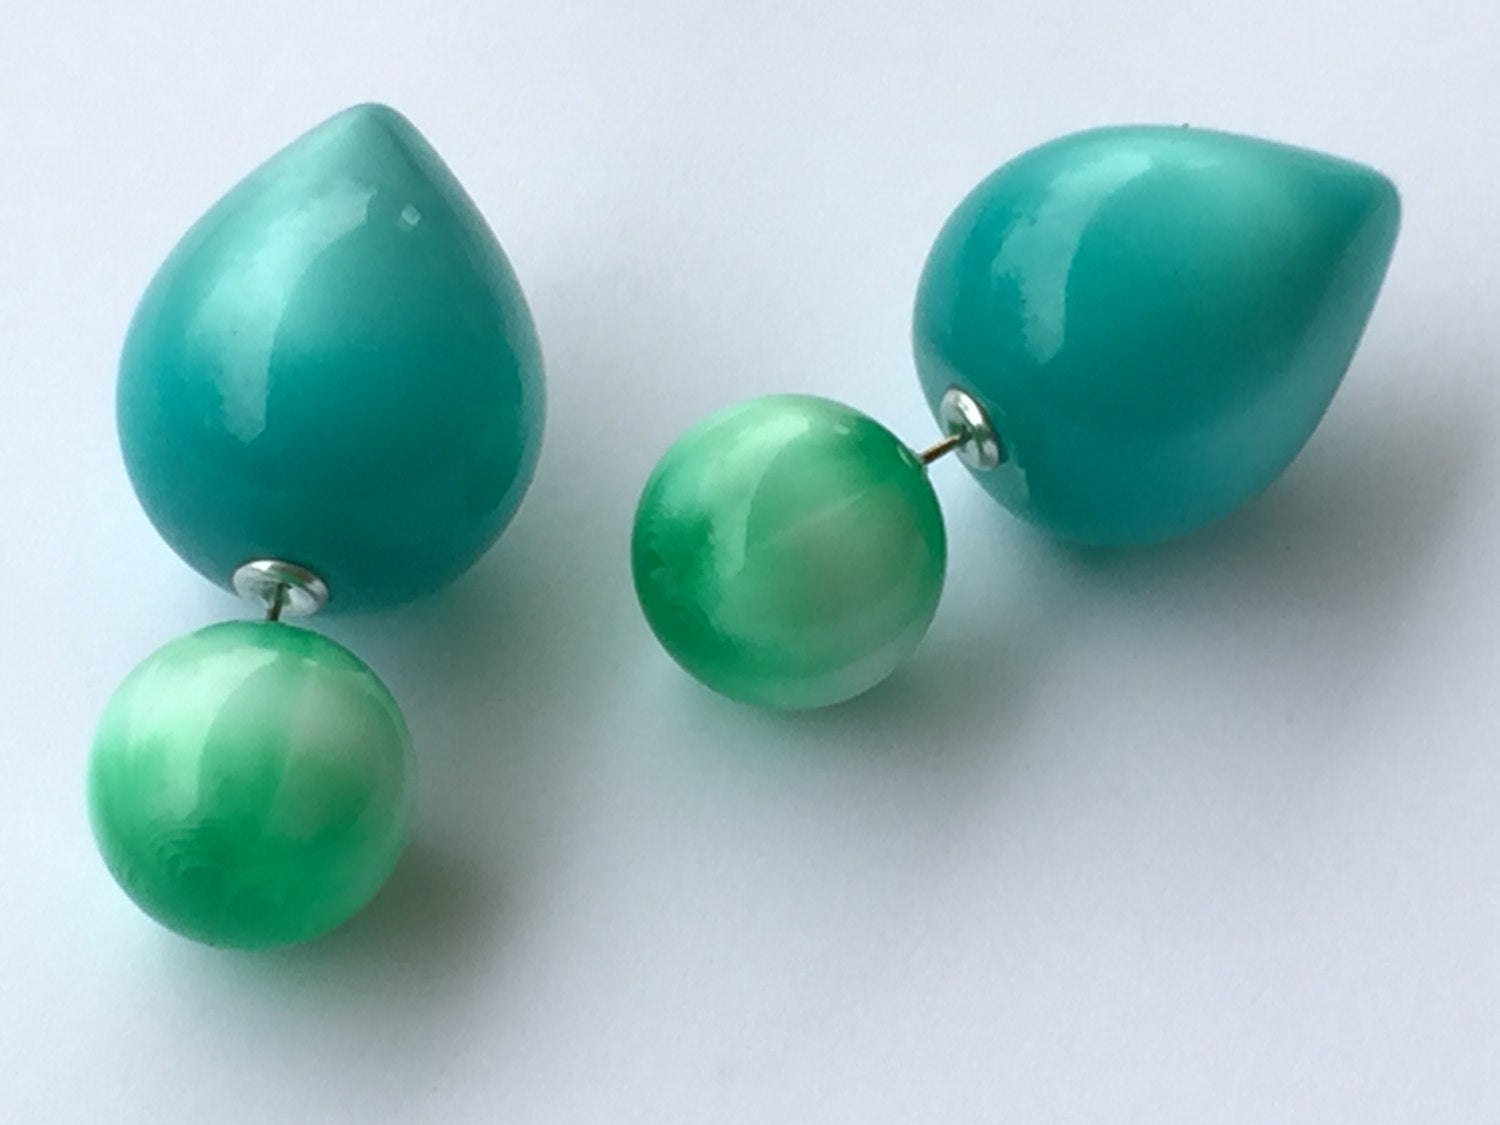 2 sided green aqua earrings